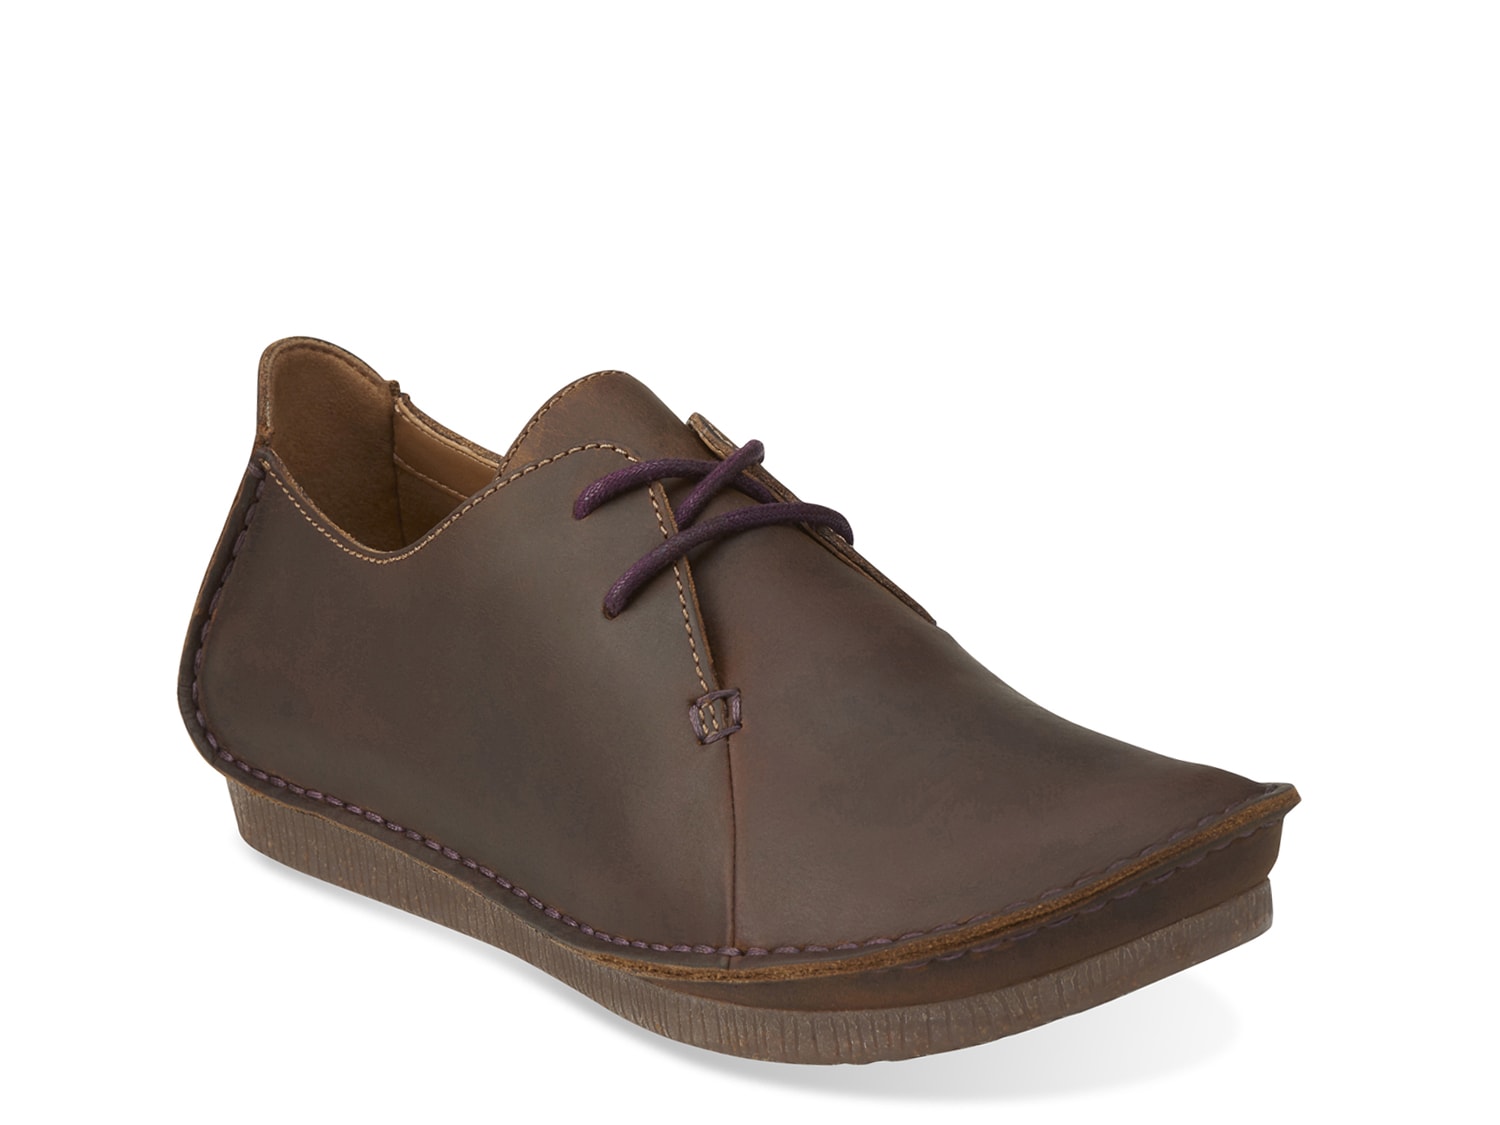 Clarks Shoes, Sandals \u0026 Boots | Slip-On 